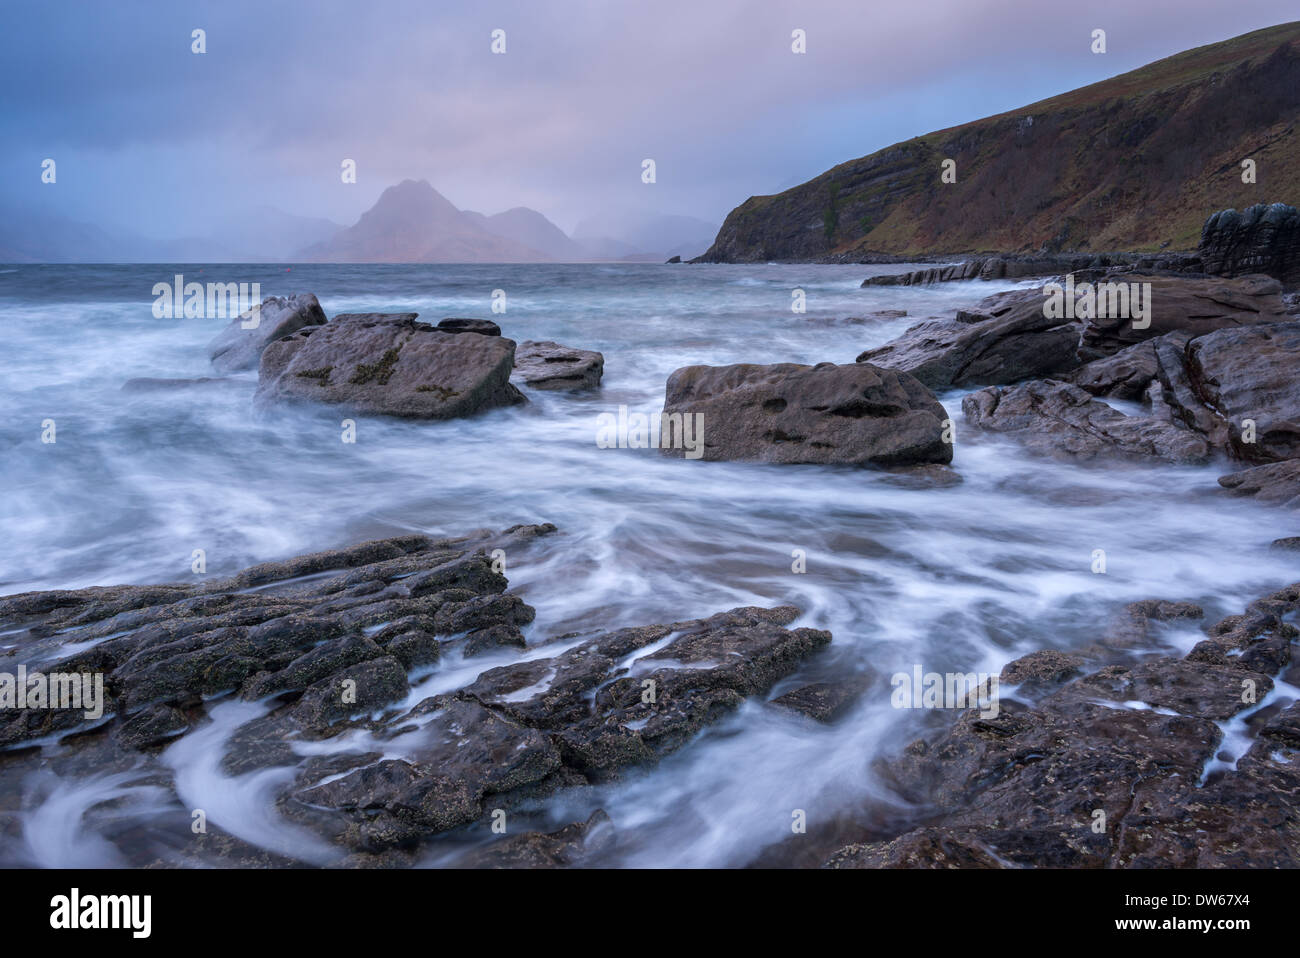 Dramatic coastline of Elgol, looking across to the Cuillins, Isle of Skye, Scotland. Winter (November) 2013. Stock Photo